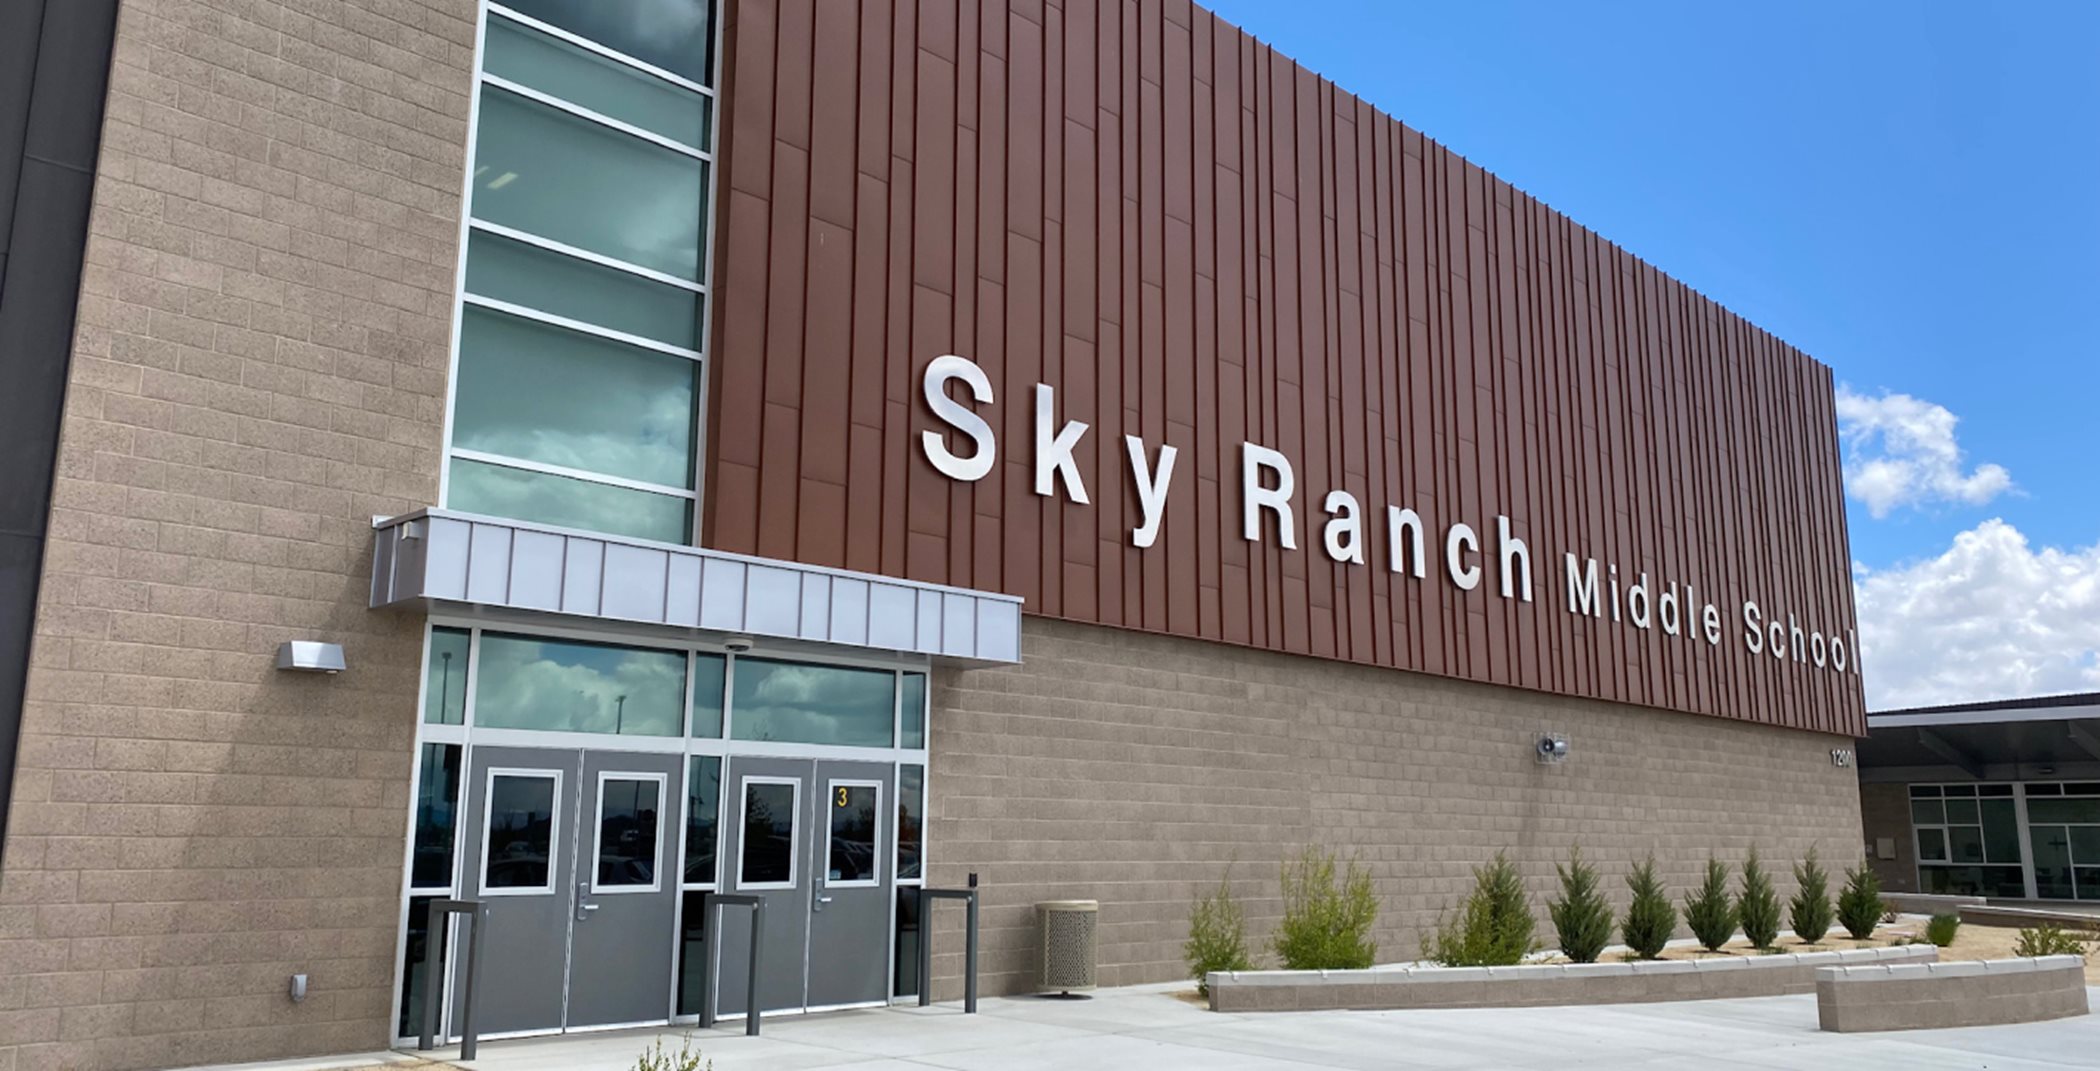 Sky Ranch middle school